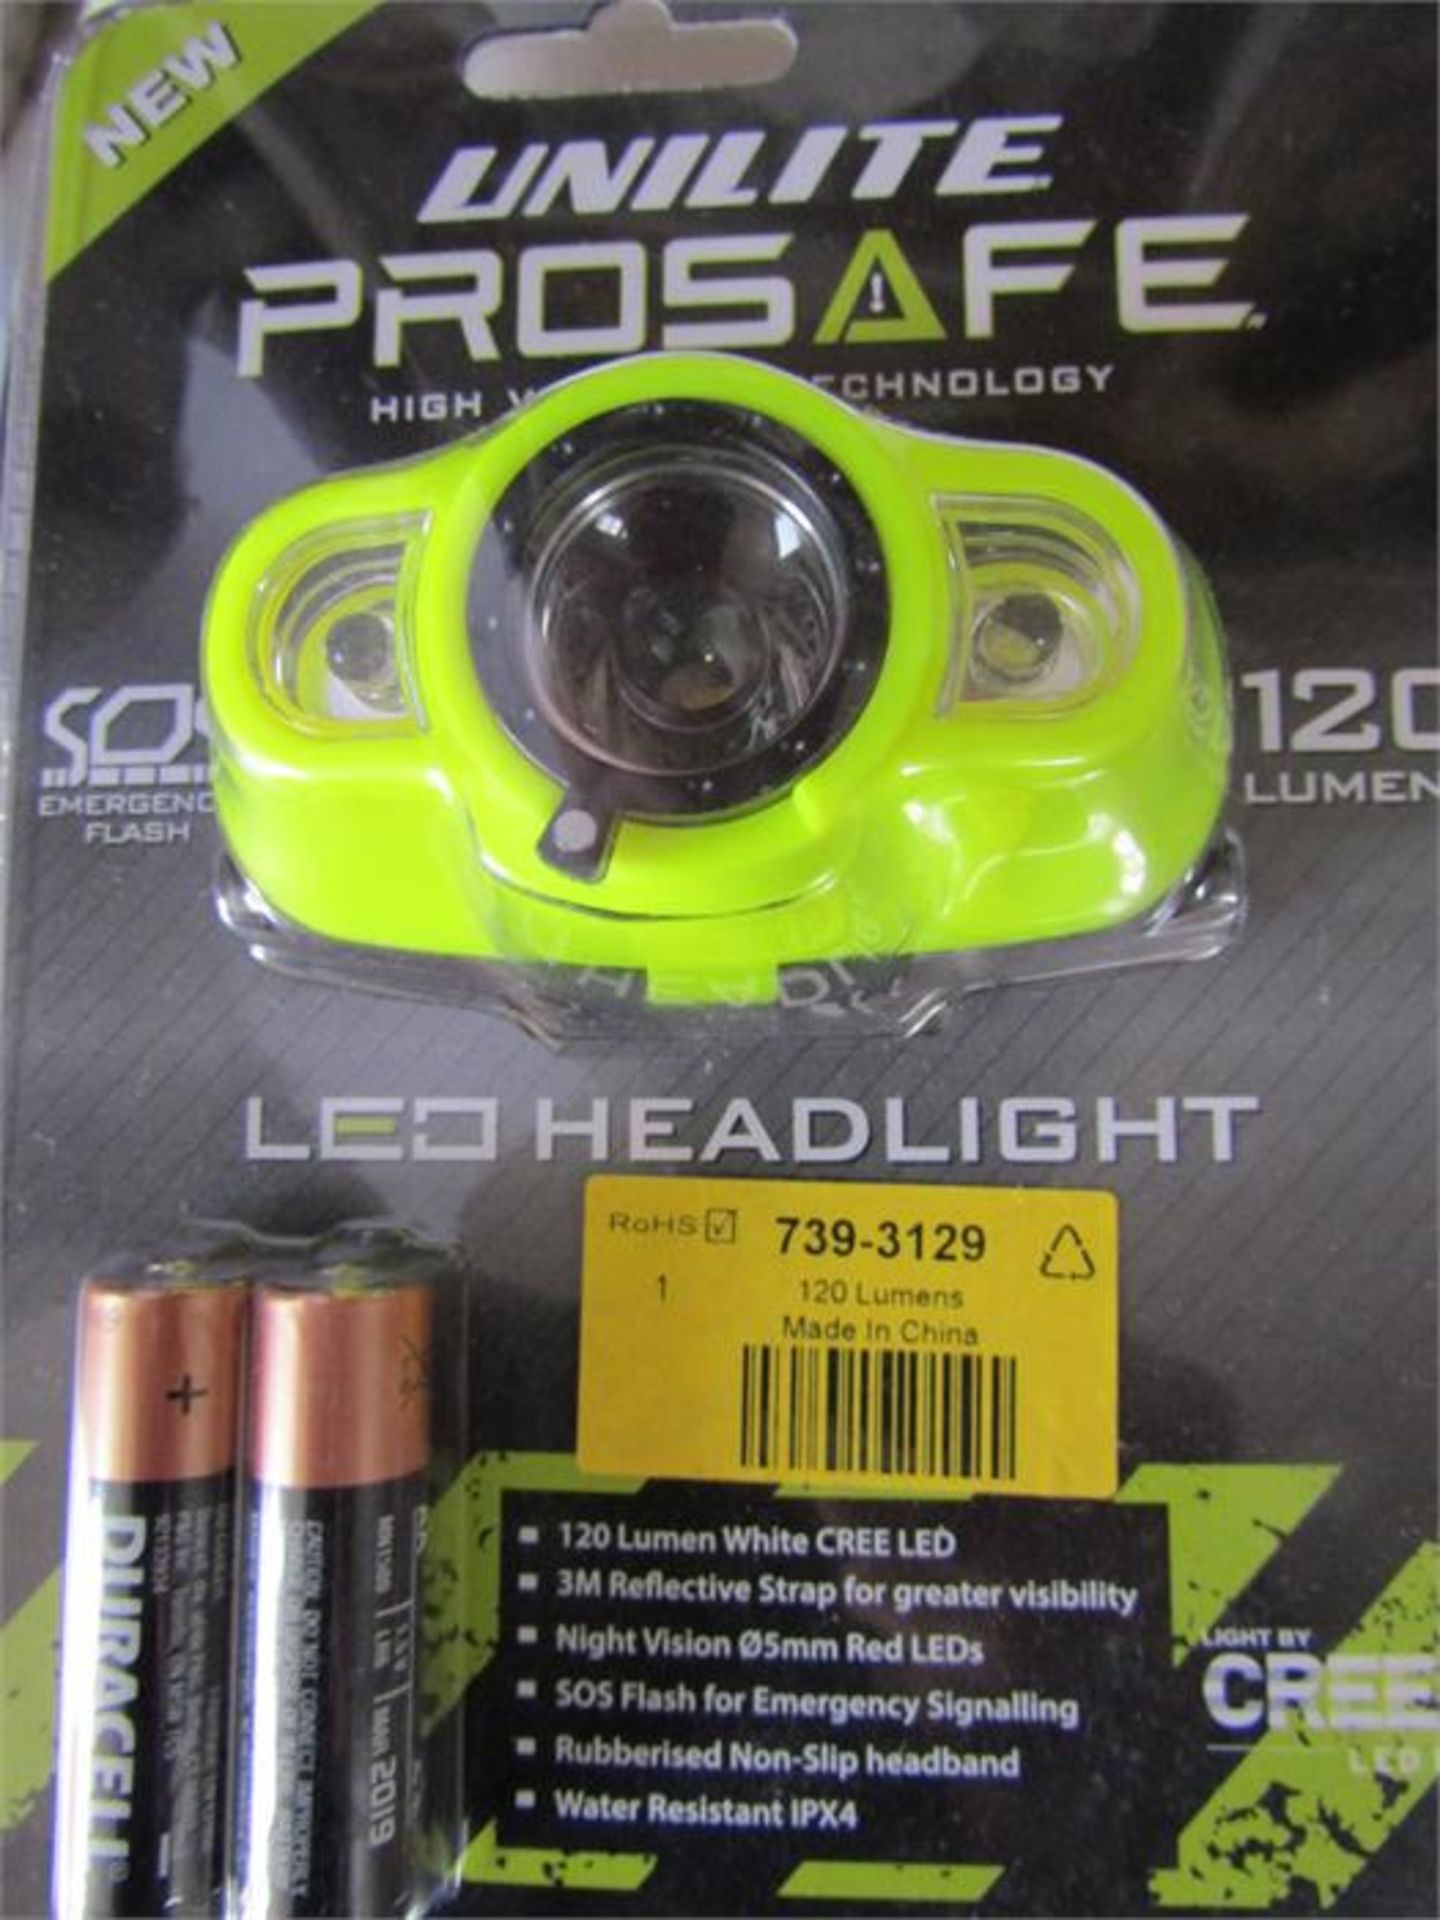 Unilite LED Head Torch Prosafe 2 x AA Alkaline